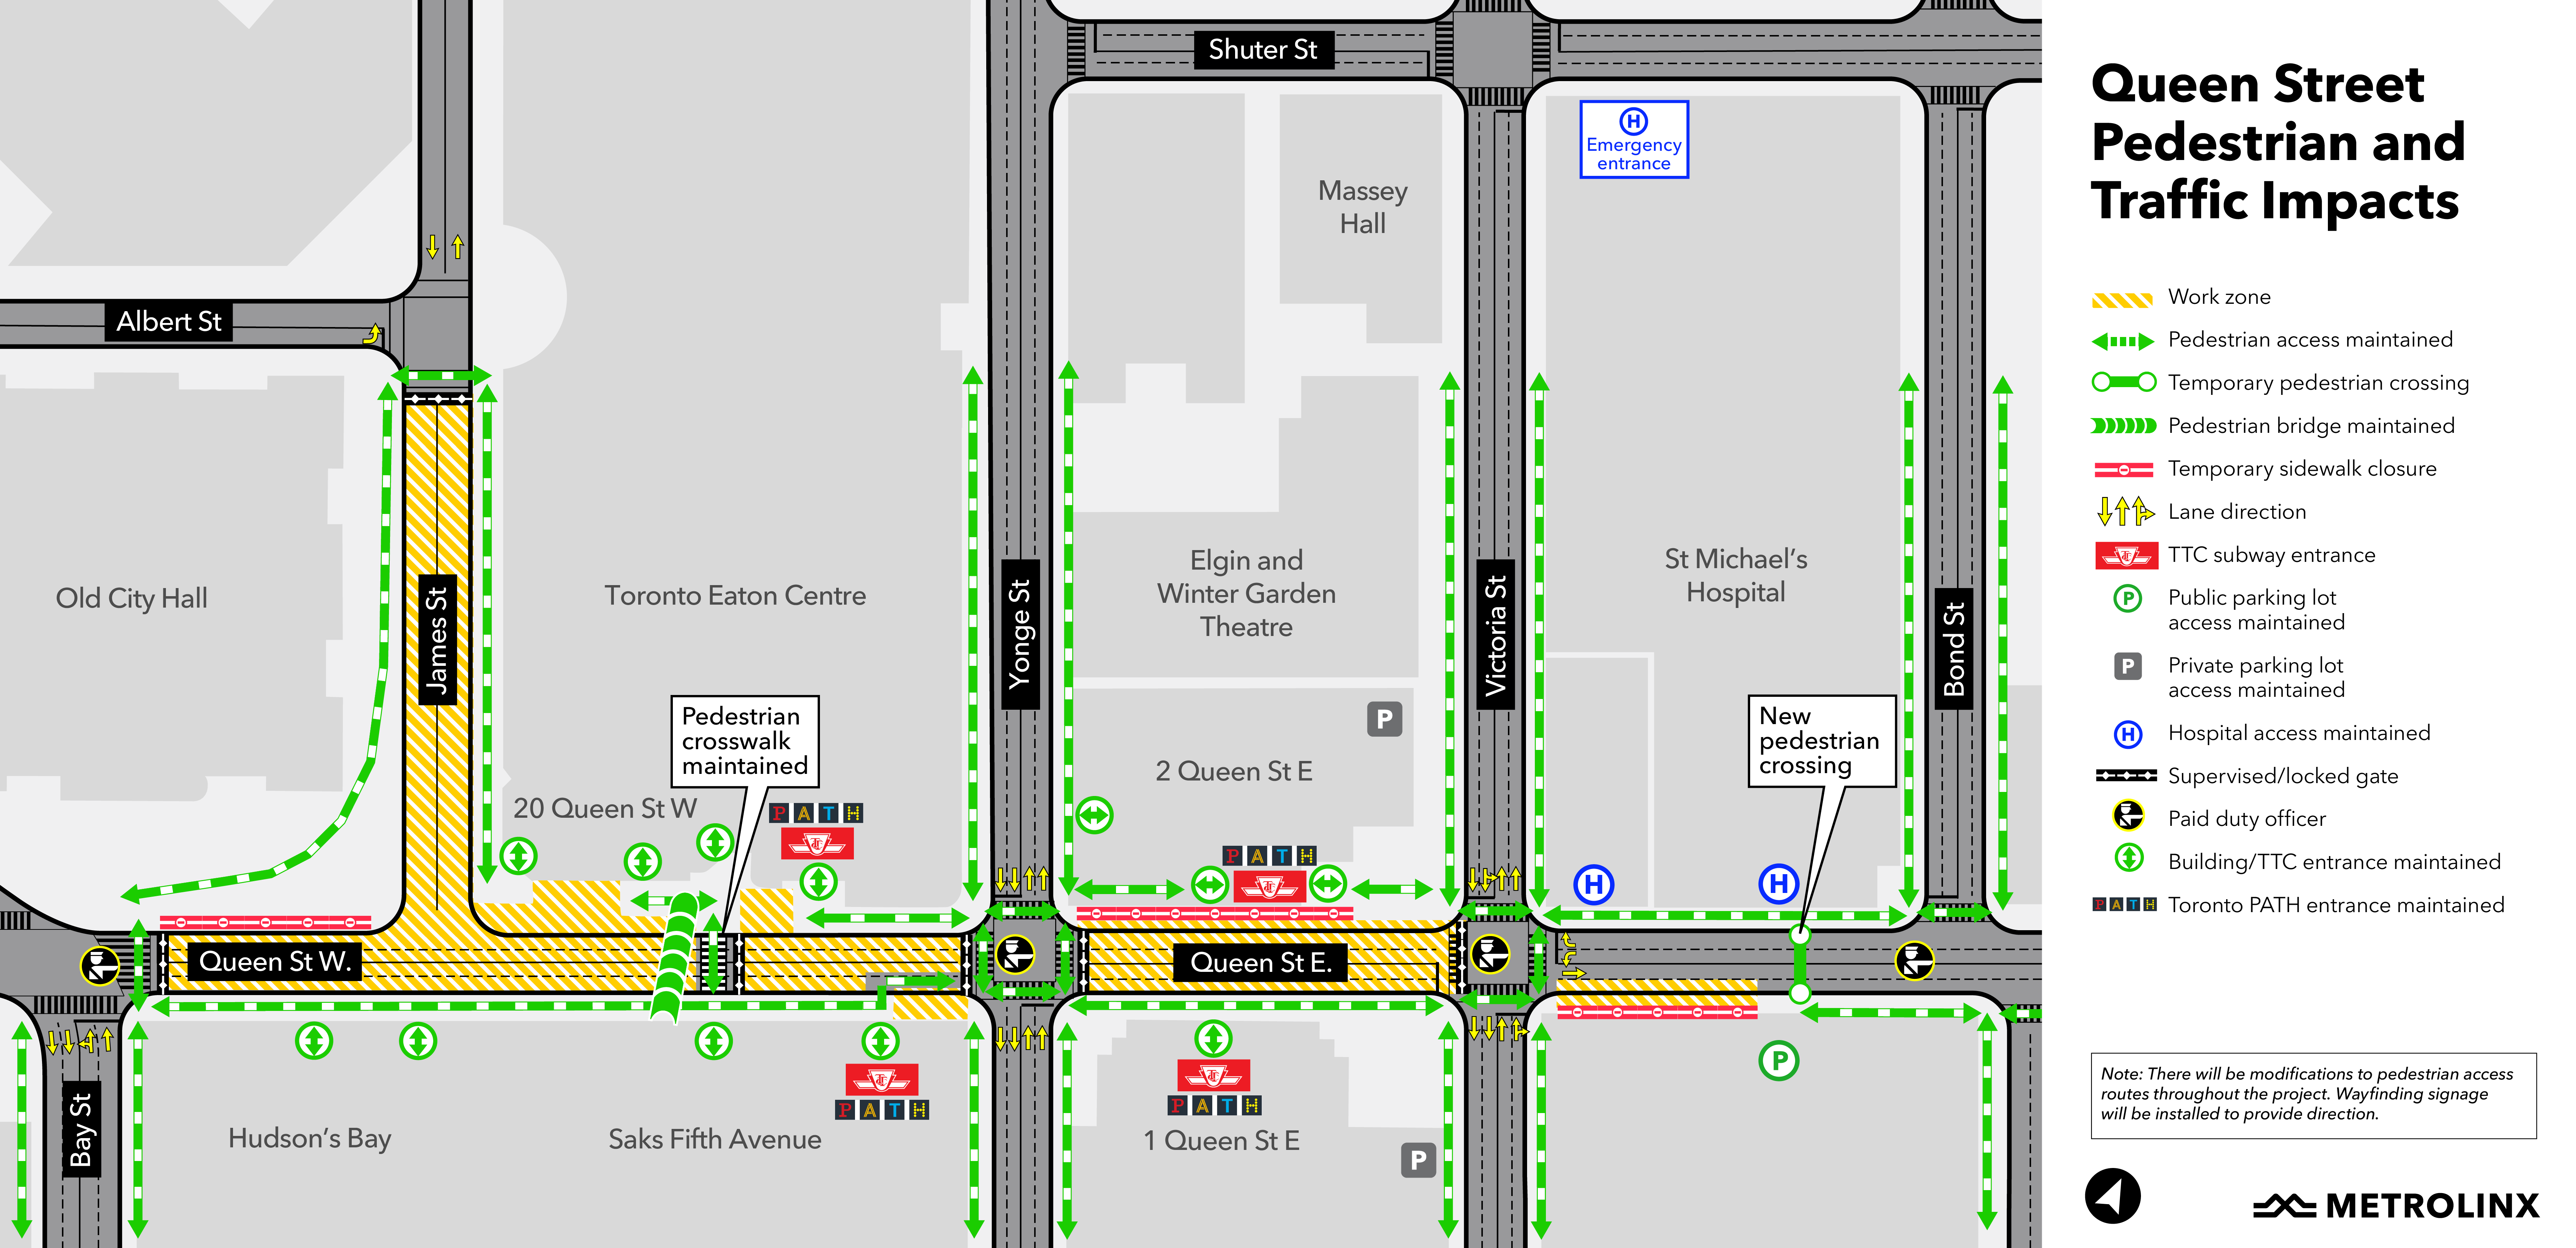 http://assets.metrolinx.com/image/upload/v1681227062/Images/Metrolinx/OLTA_May_1_Queen_Closure_Traffic_Impacts_Map_20230411_v13.png